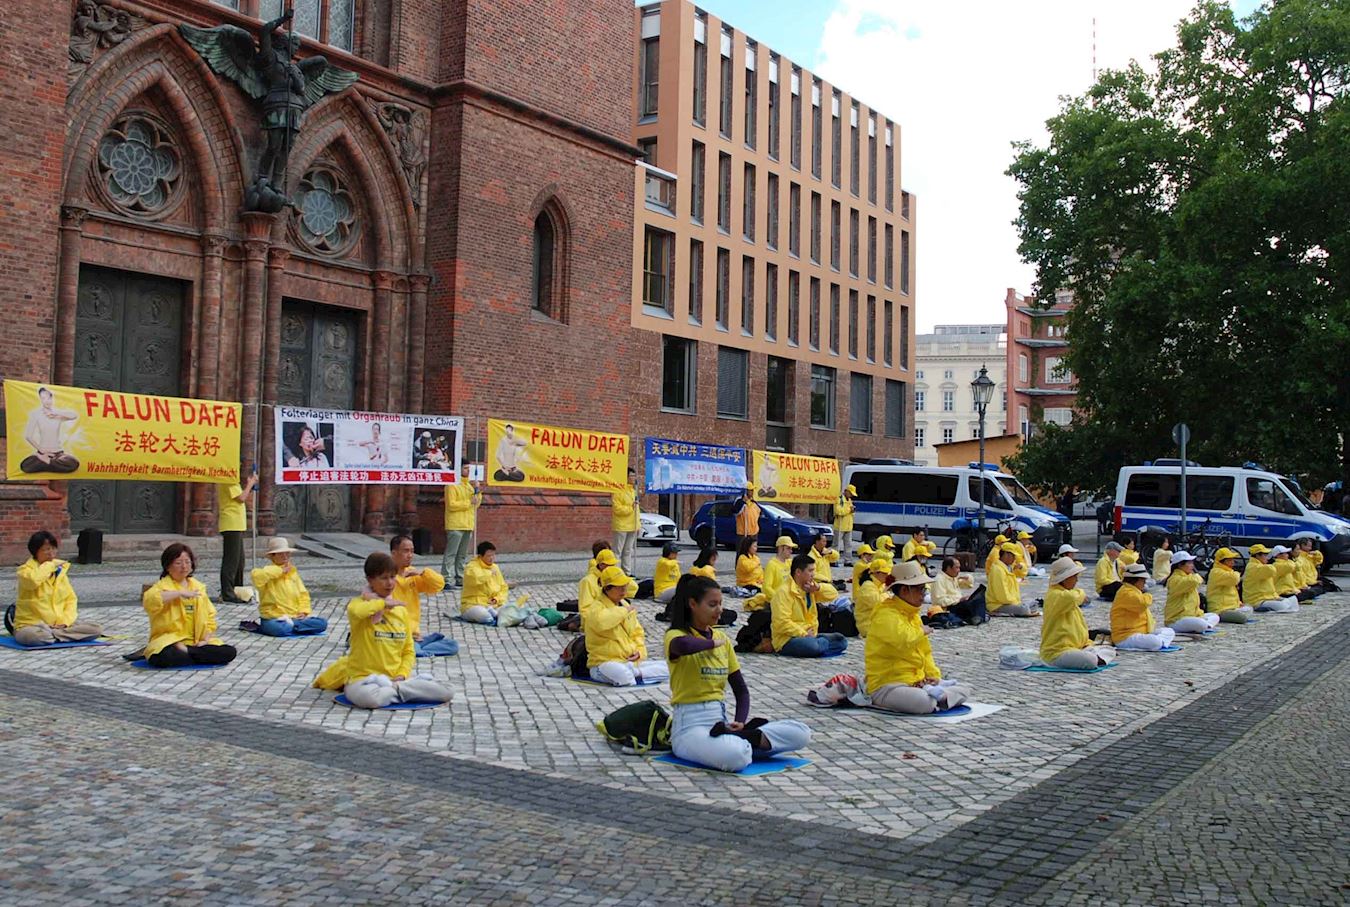 Image for article 35 000 Allemands demandent la fin de la persécution du Falun Gong